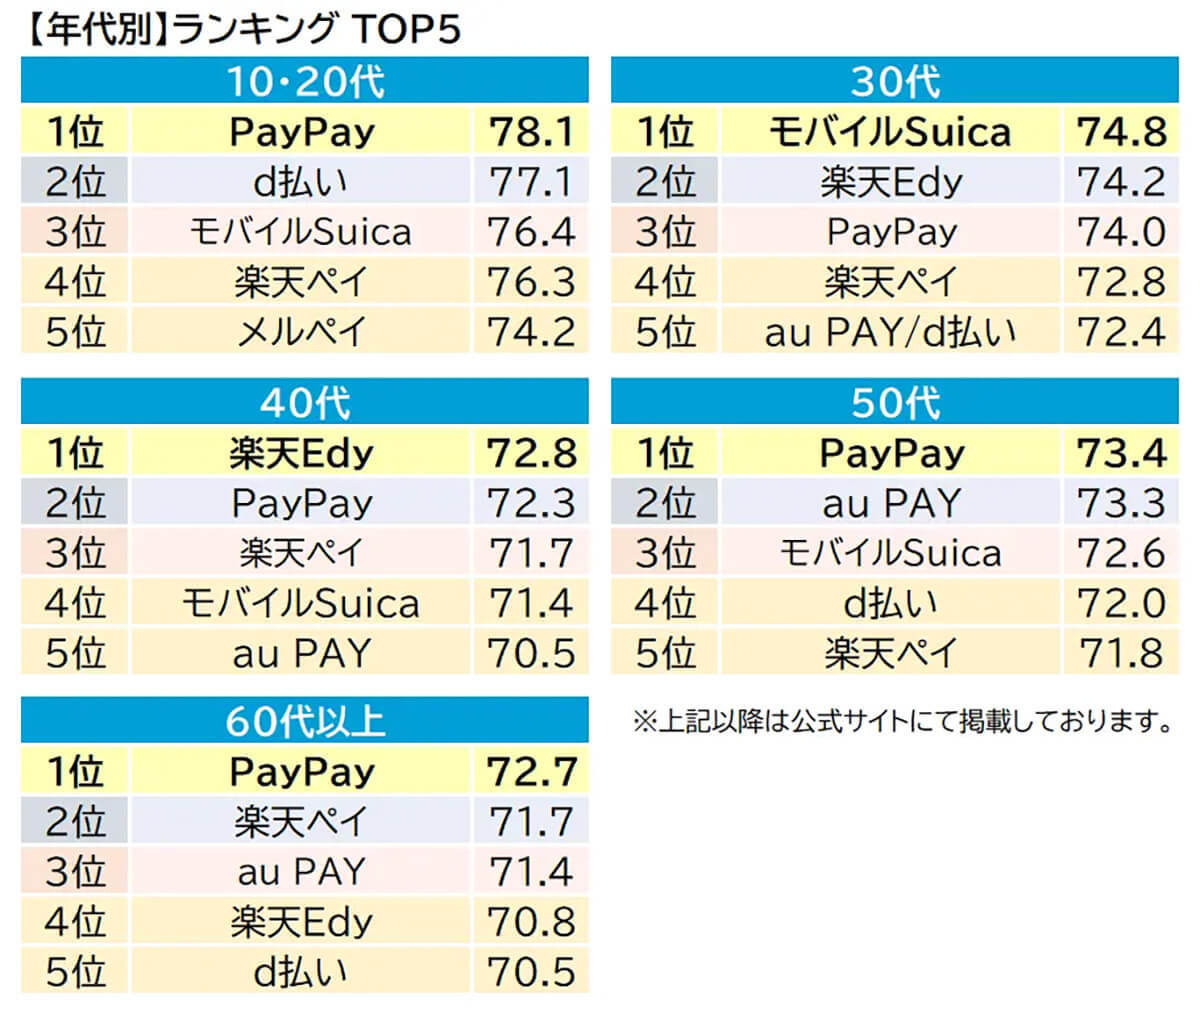 PayPay「スマホ決済満足度ランキング」2年連続1位に【オリコン調べ】